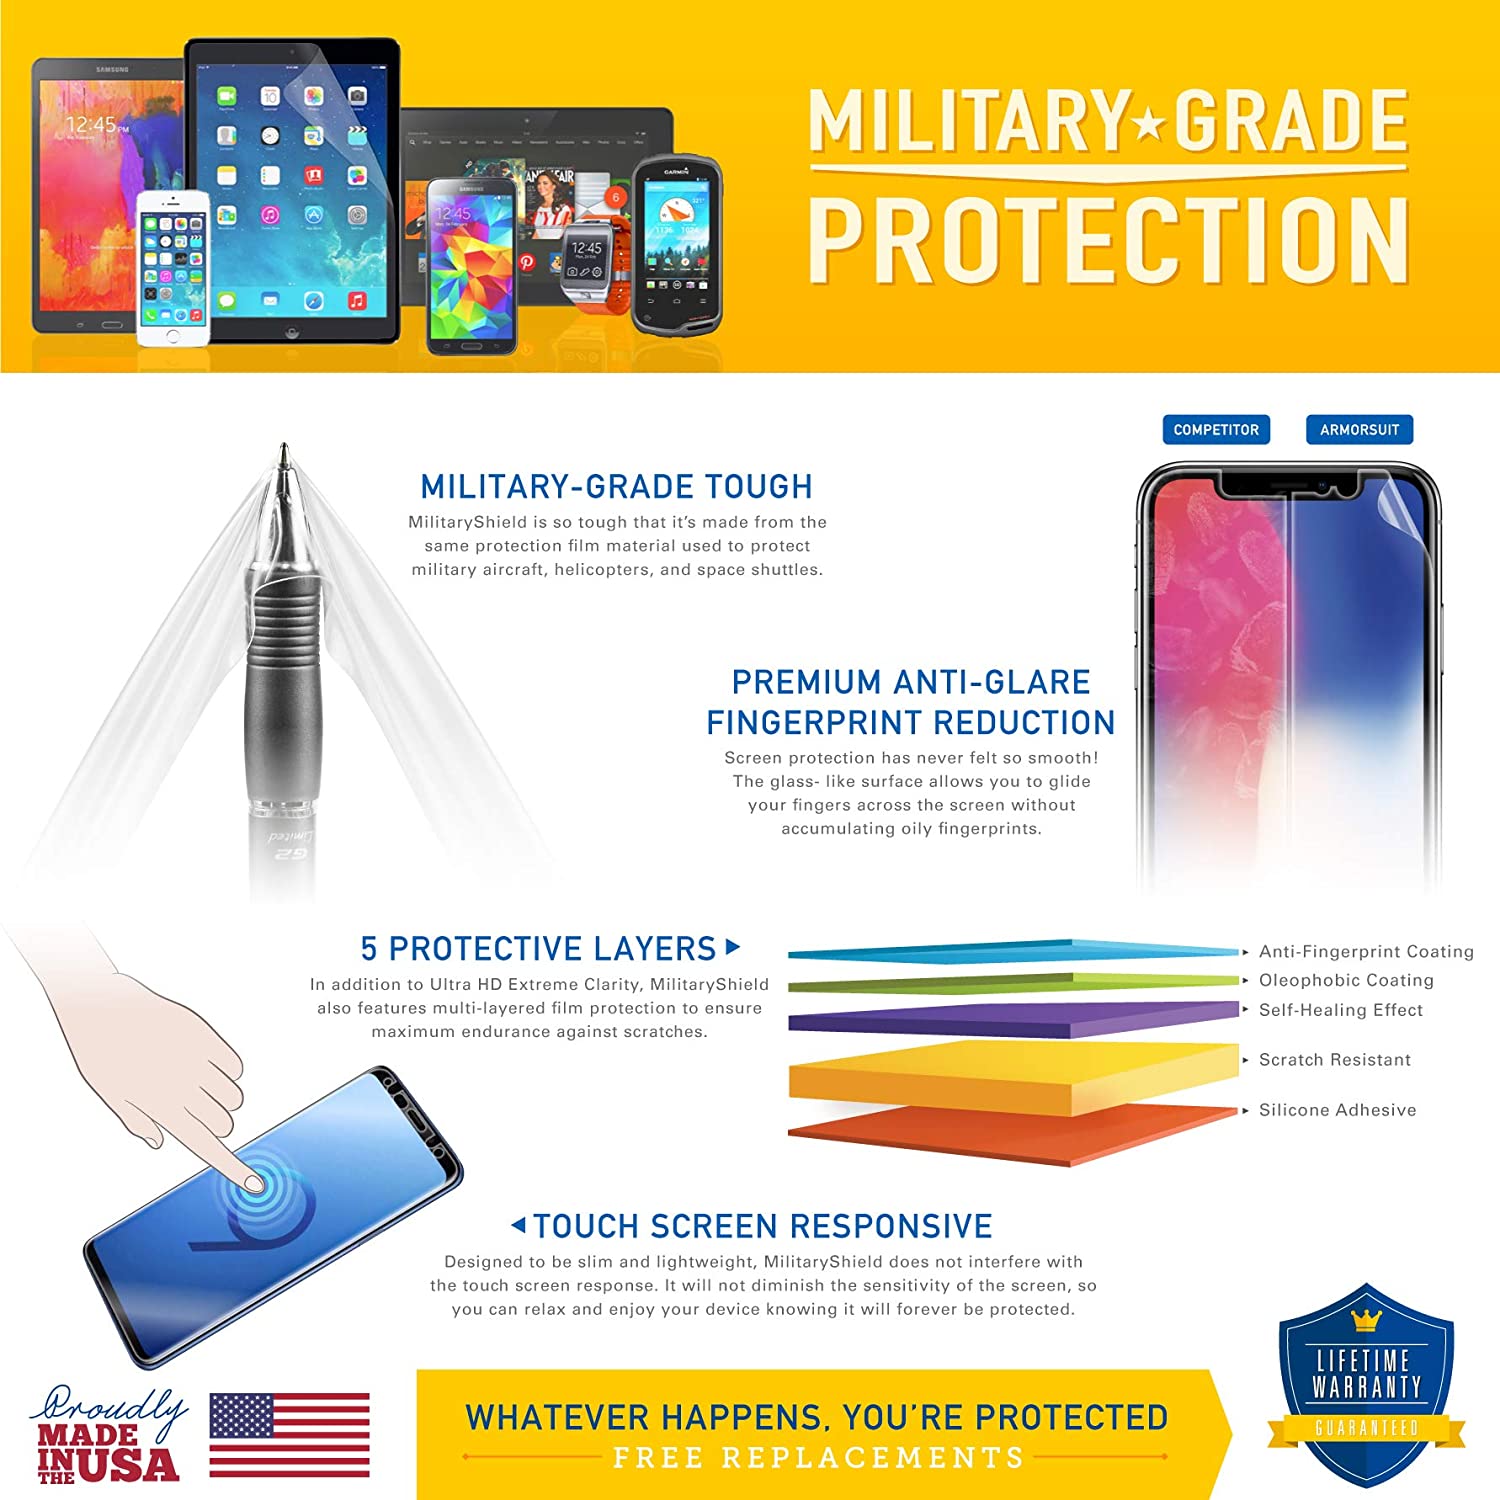 Samsung ATIV Smart PC 500T Full Body Skin Protector